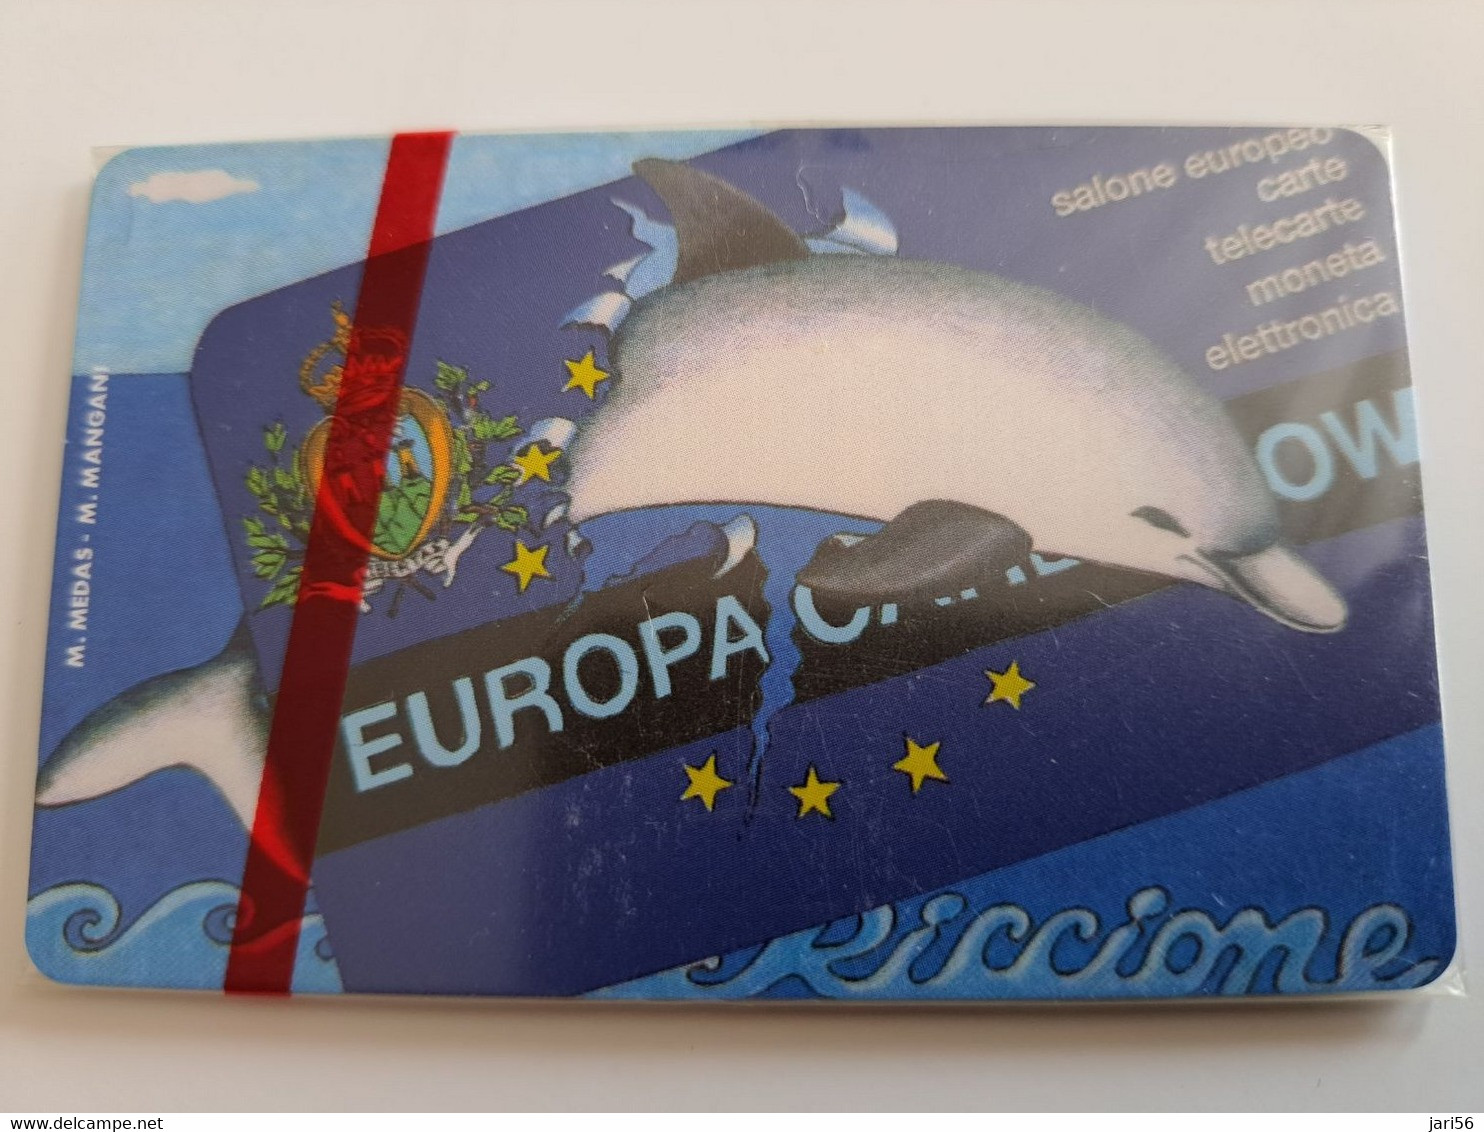 SAN MARINO CHIPCARD  L 10.000 /  EUROPA CARD SHOW / DOLPHIN /  MINT IN WRAPPER**   ** 10223 ** - San Marino